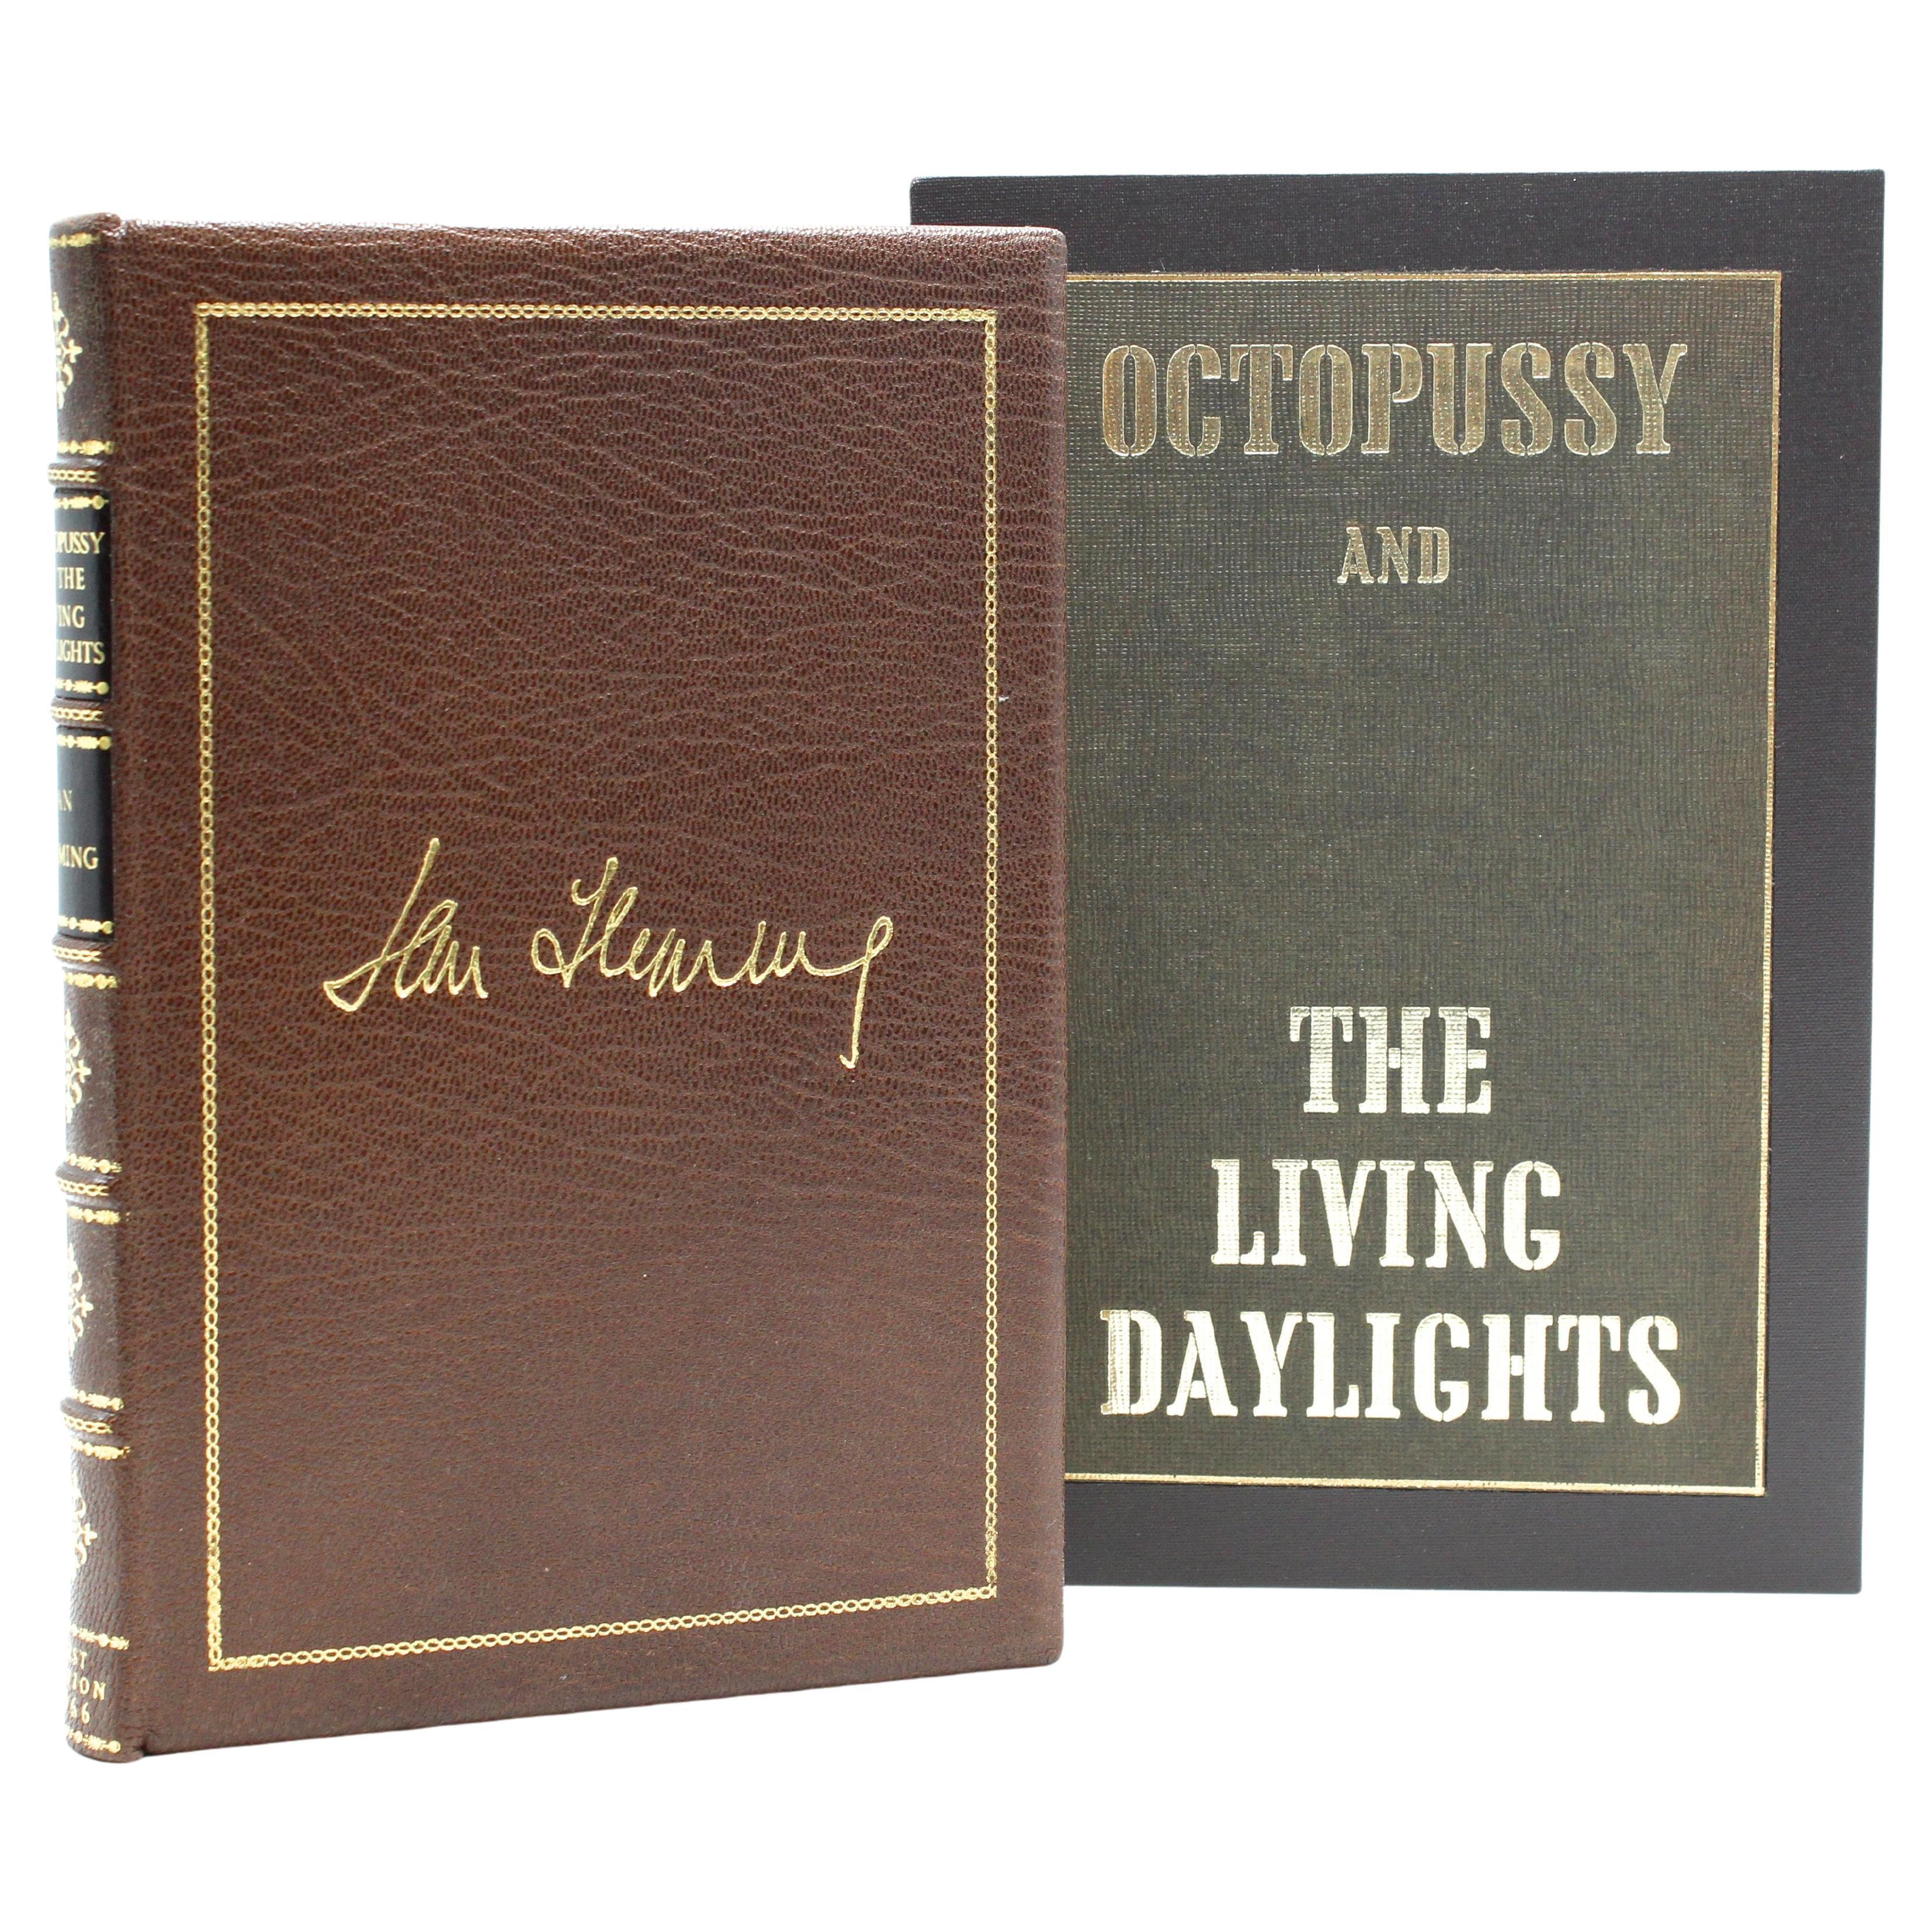 Octopussy and The Living Daylights de Ian Fleming, première édition au Royaume-Uni, 1966